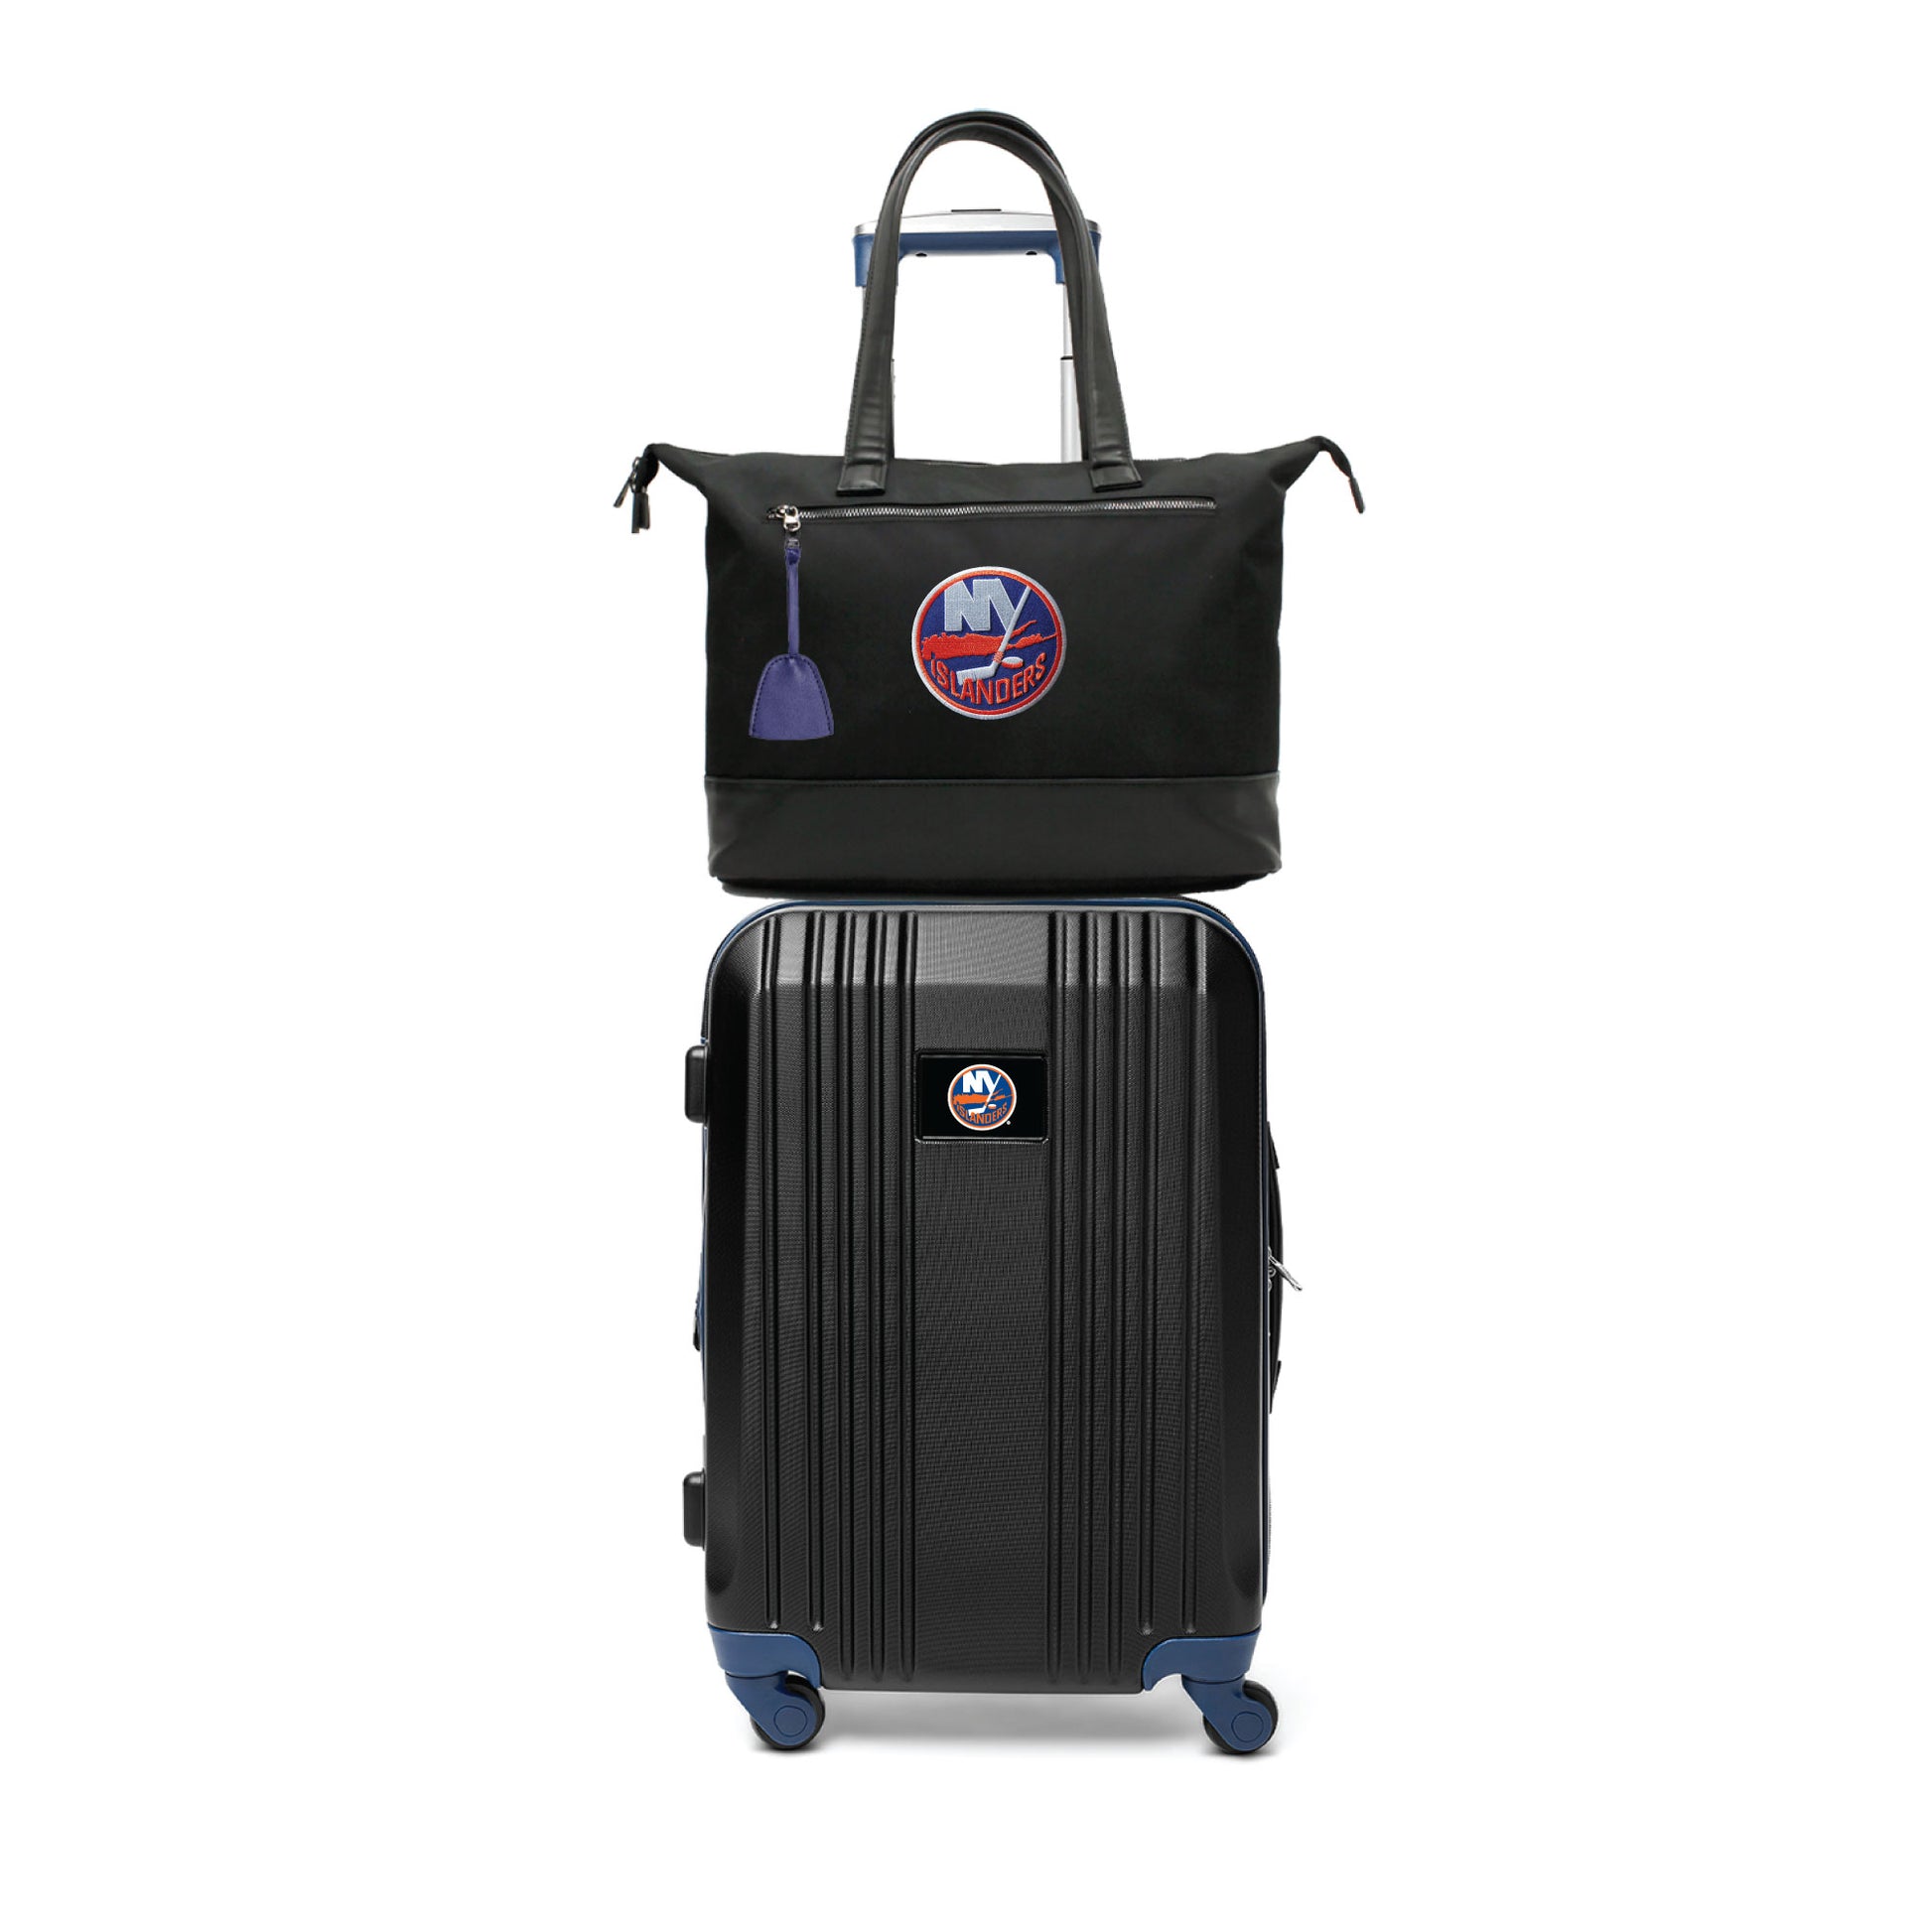 New York Islanders Premium Laptop Tote Bag and Luggage Set